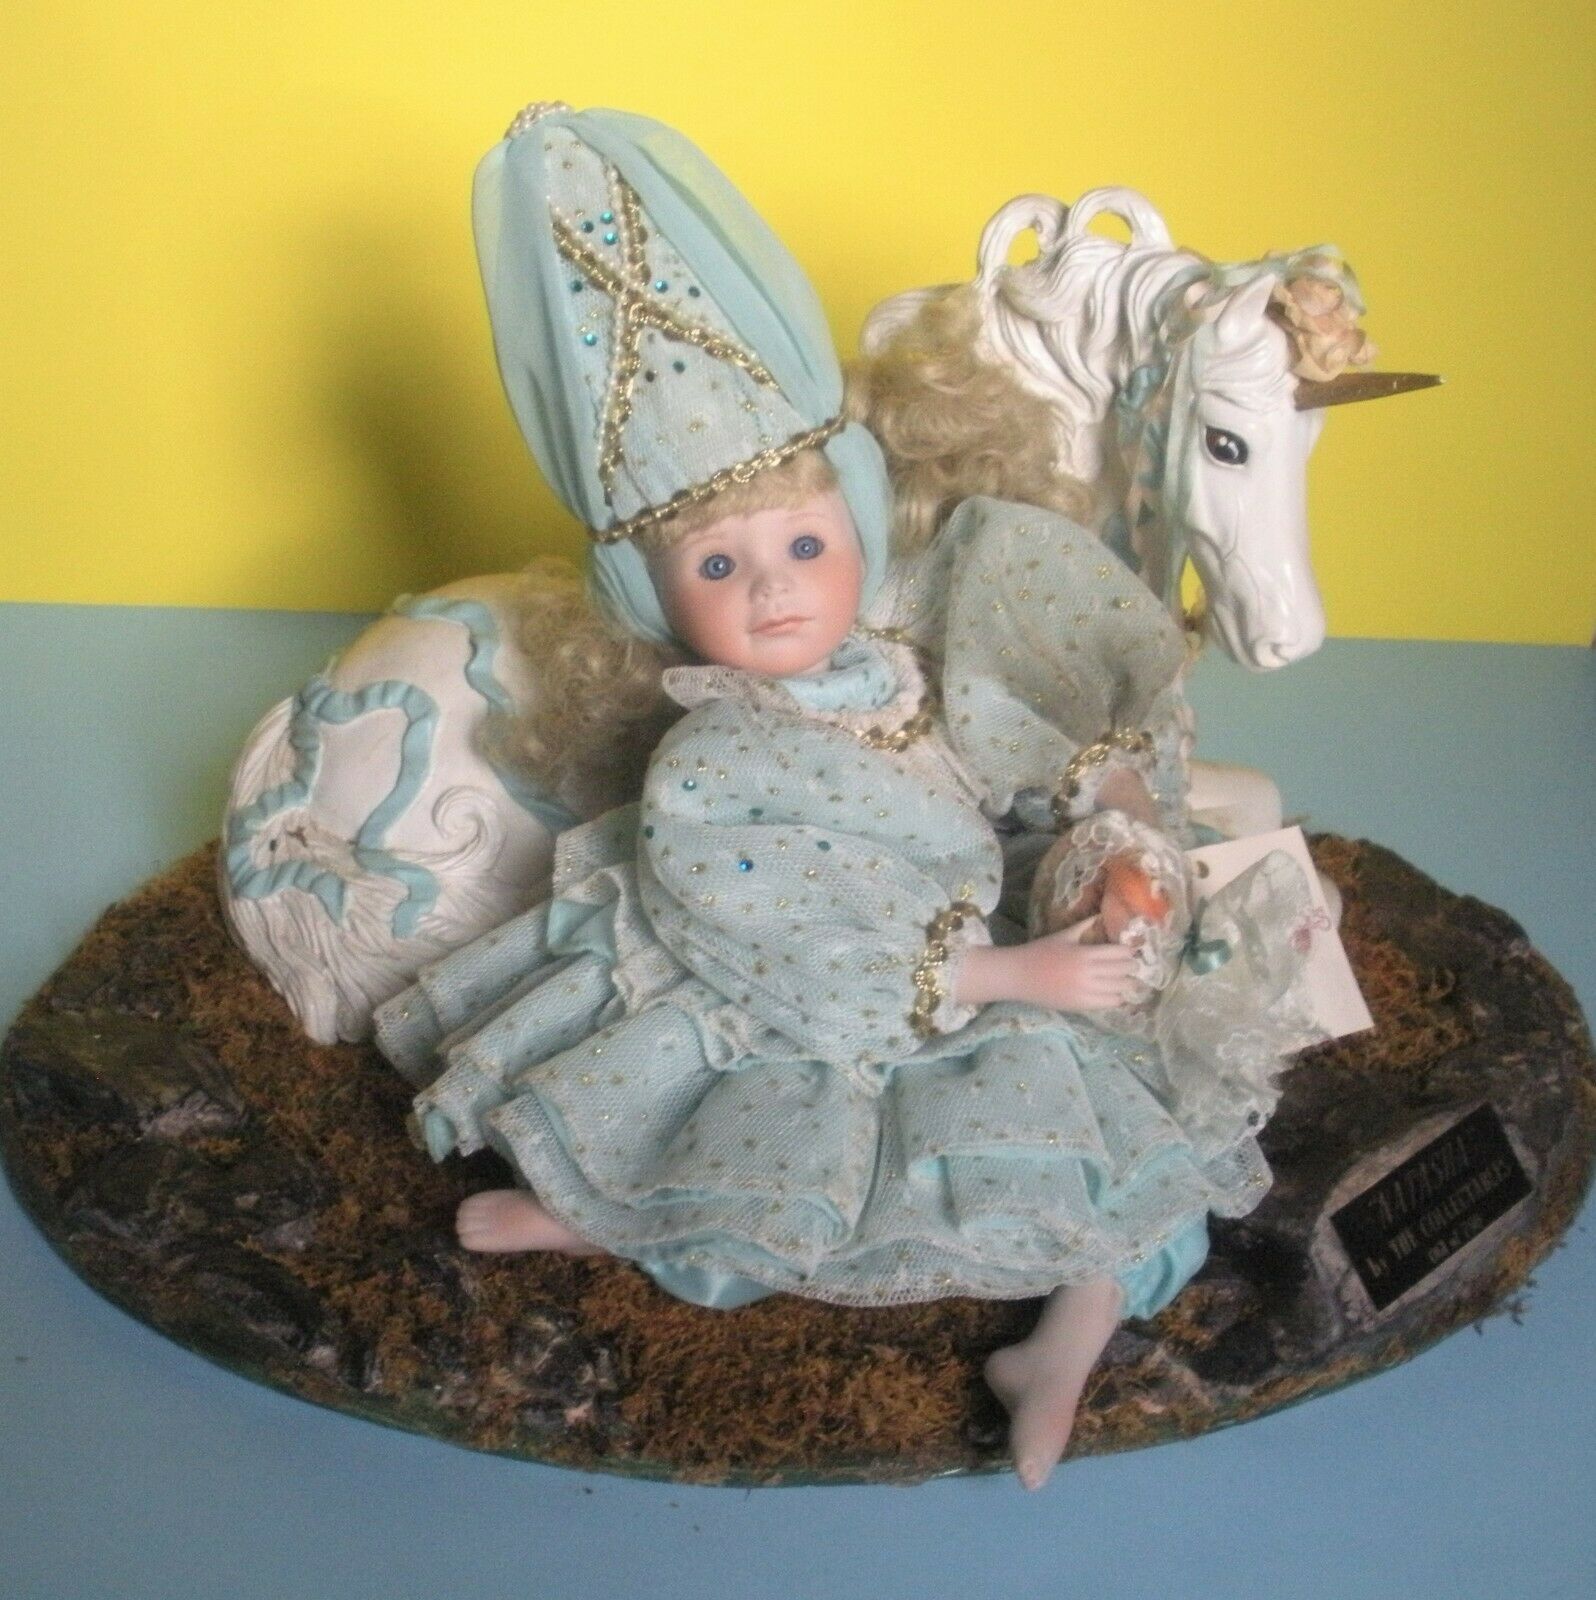 Phyllis Parkins "natasha" 14" Fairy  Doll Display With Unicorn- Only 750 Made